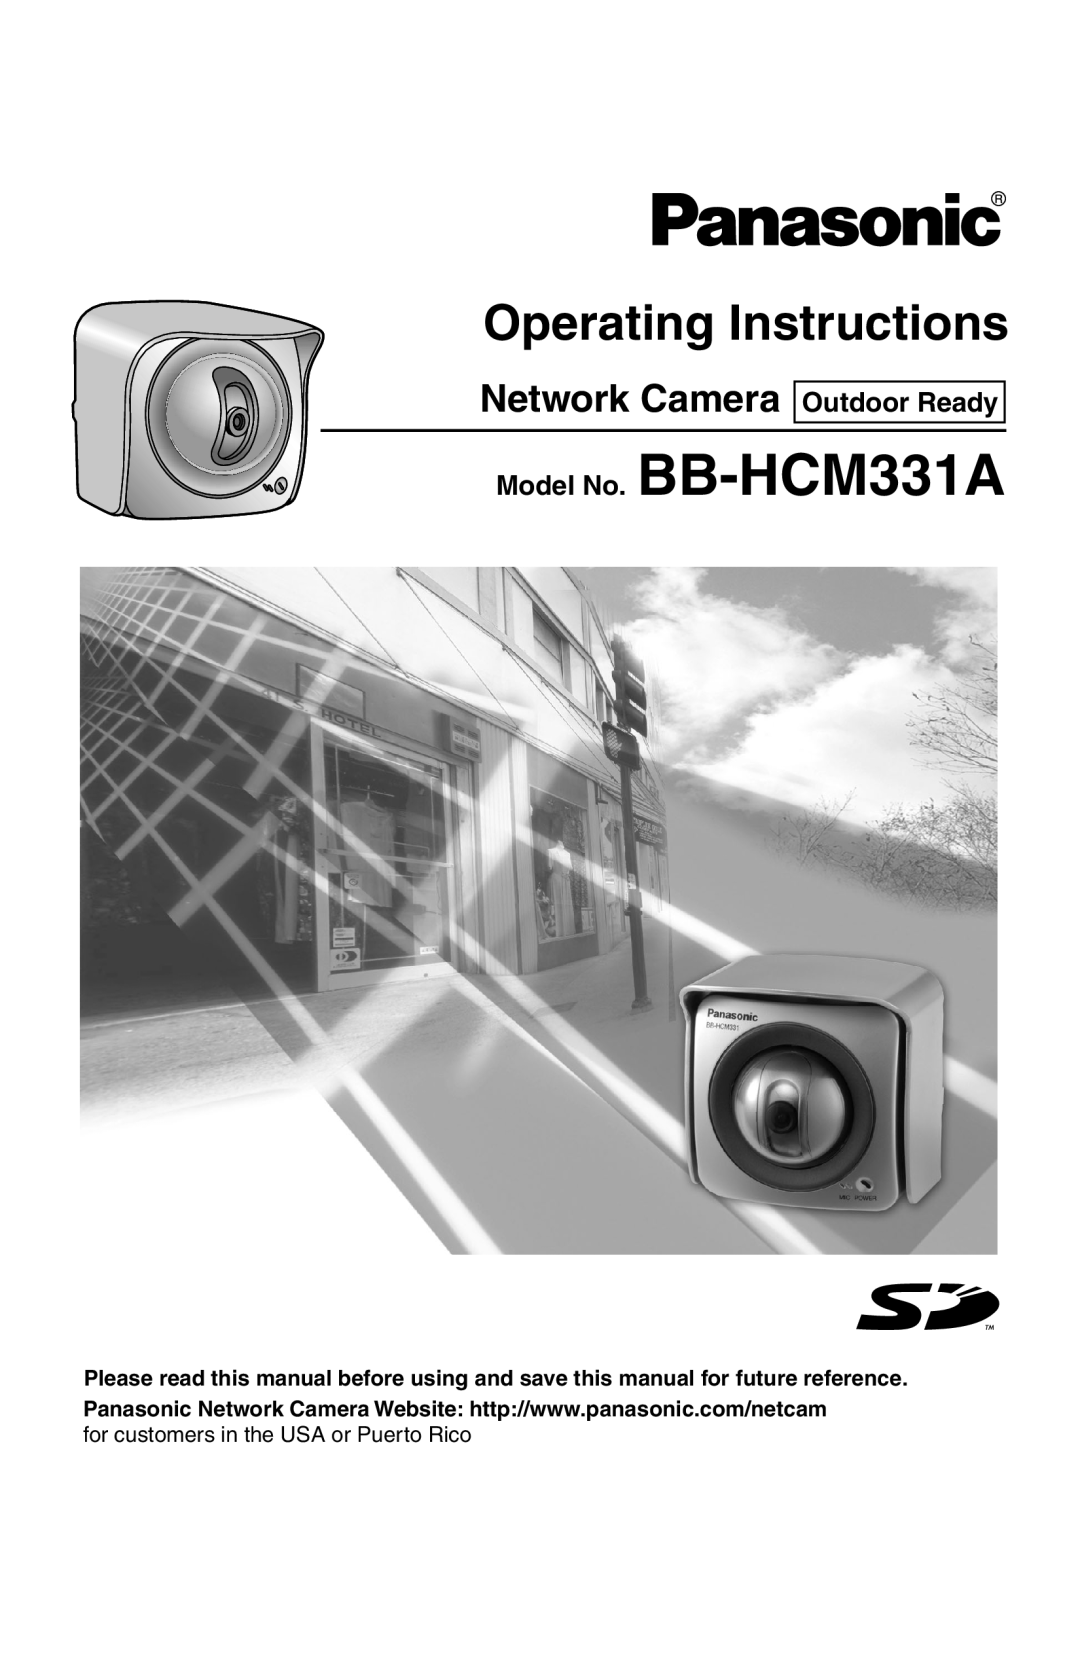 Panasonic operating instructions Network Camera, Outdoor Ready, Model No. BB-HCM331A, Operating Instructions 